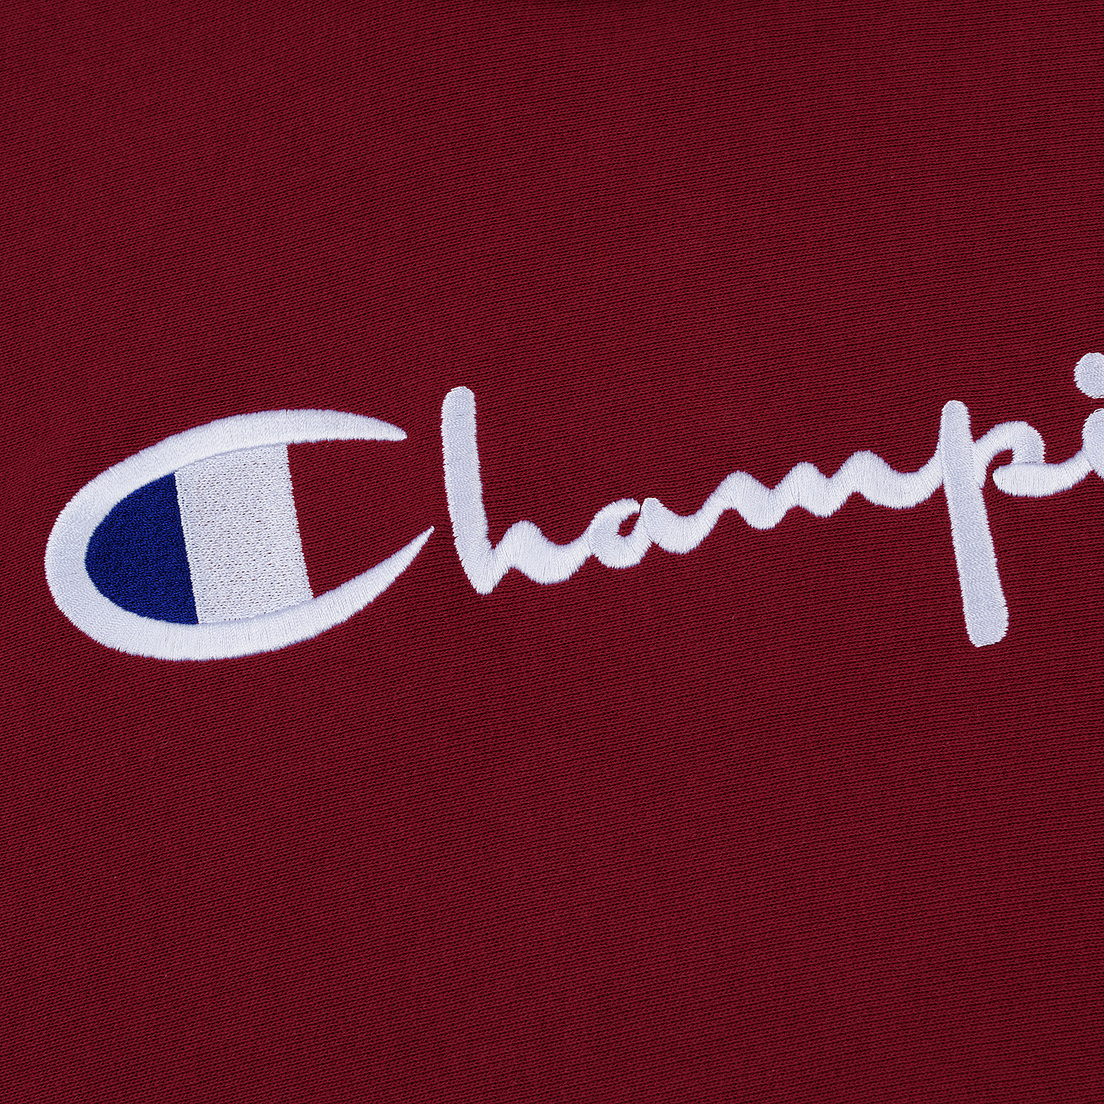 Champion Reverse Weave Мужская толстовка Hooded Big Script Logo